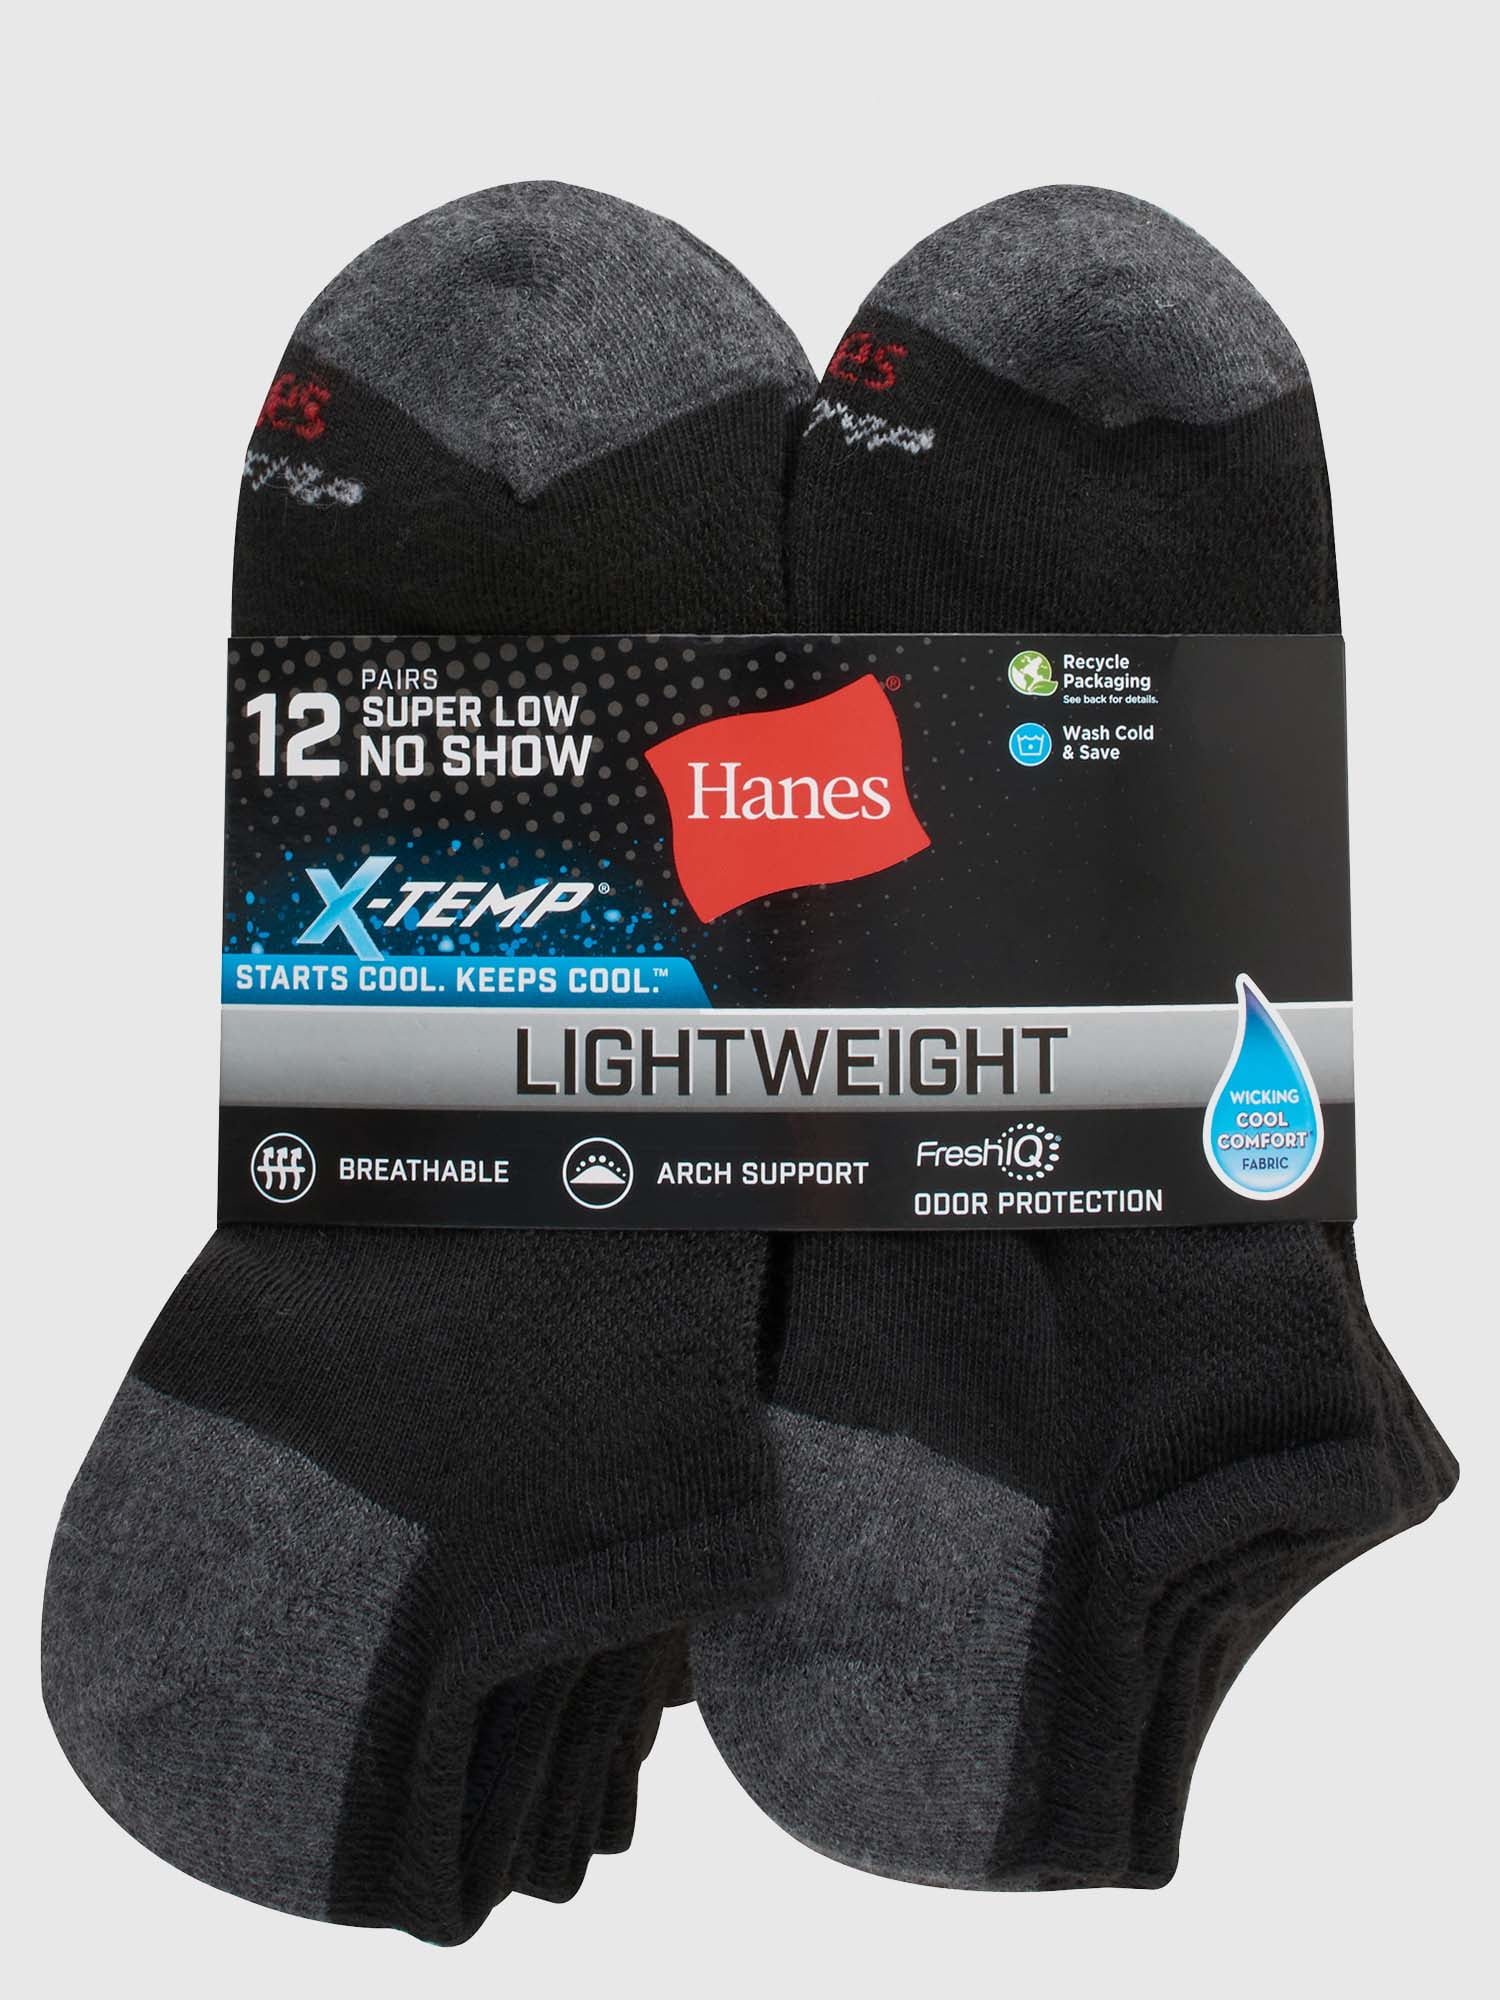 Hanes Men's X-Temp Active Cool Lightweight Super Low No Show Socks,  12-Pack, Size 6-12 